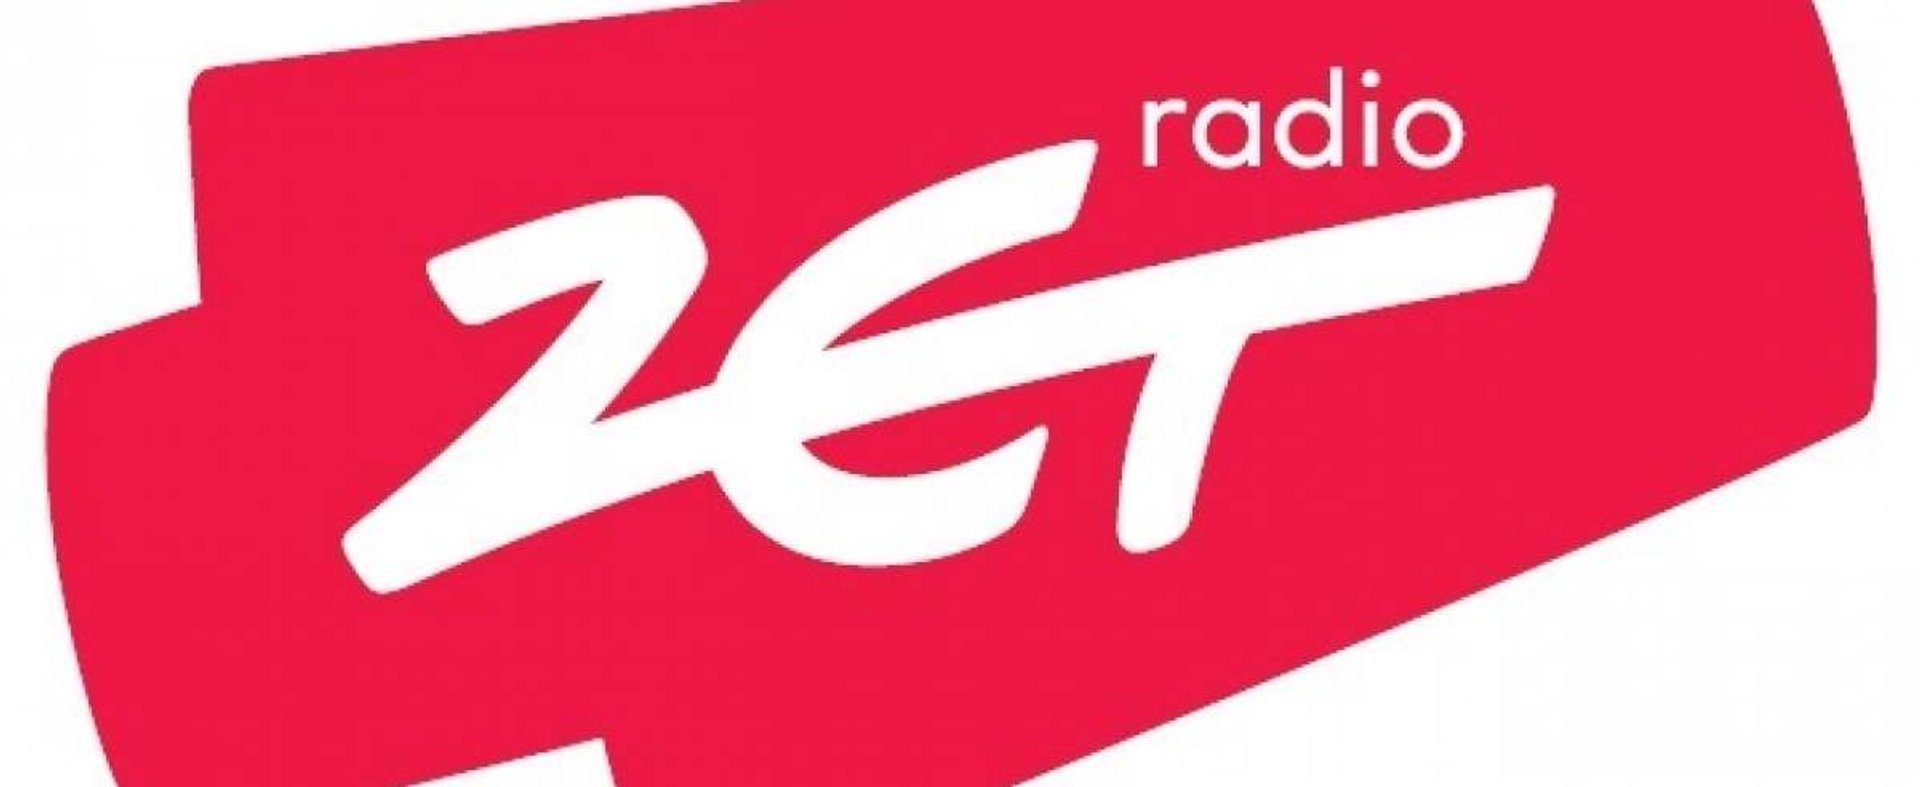 Radio ZET ma już 30 lat